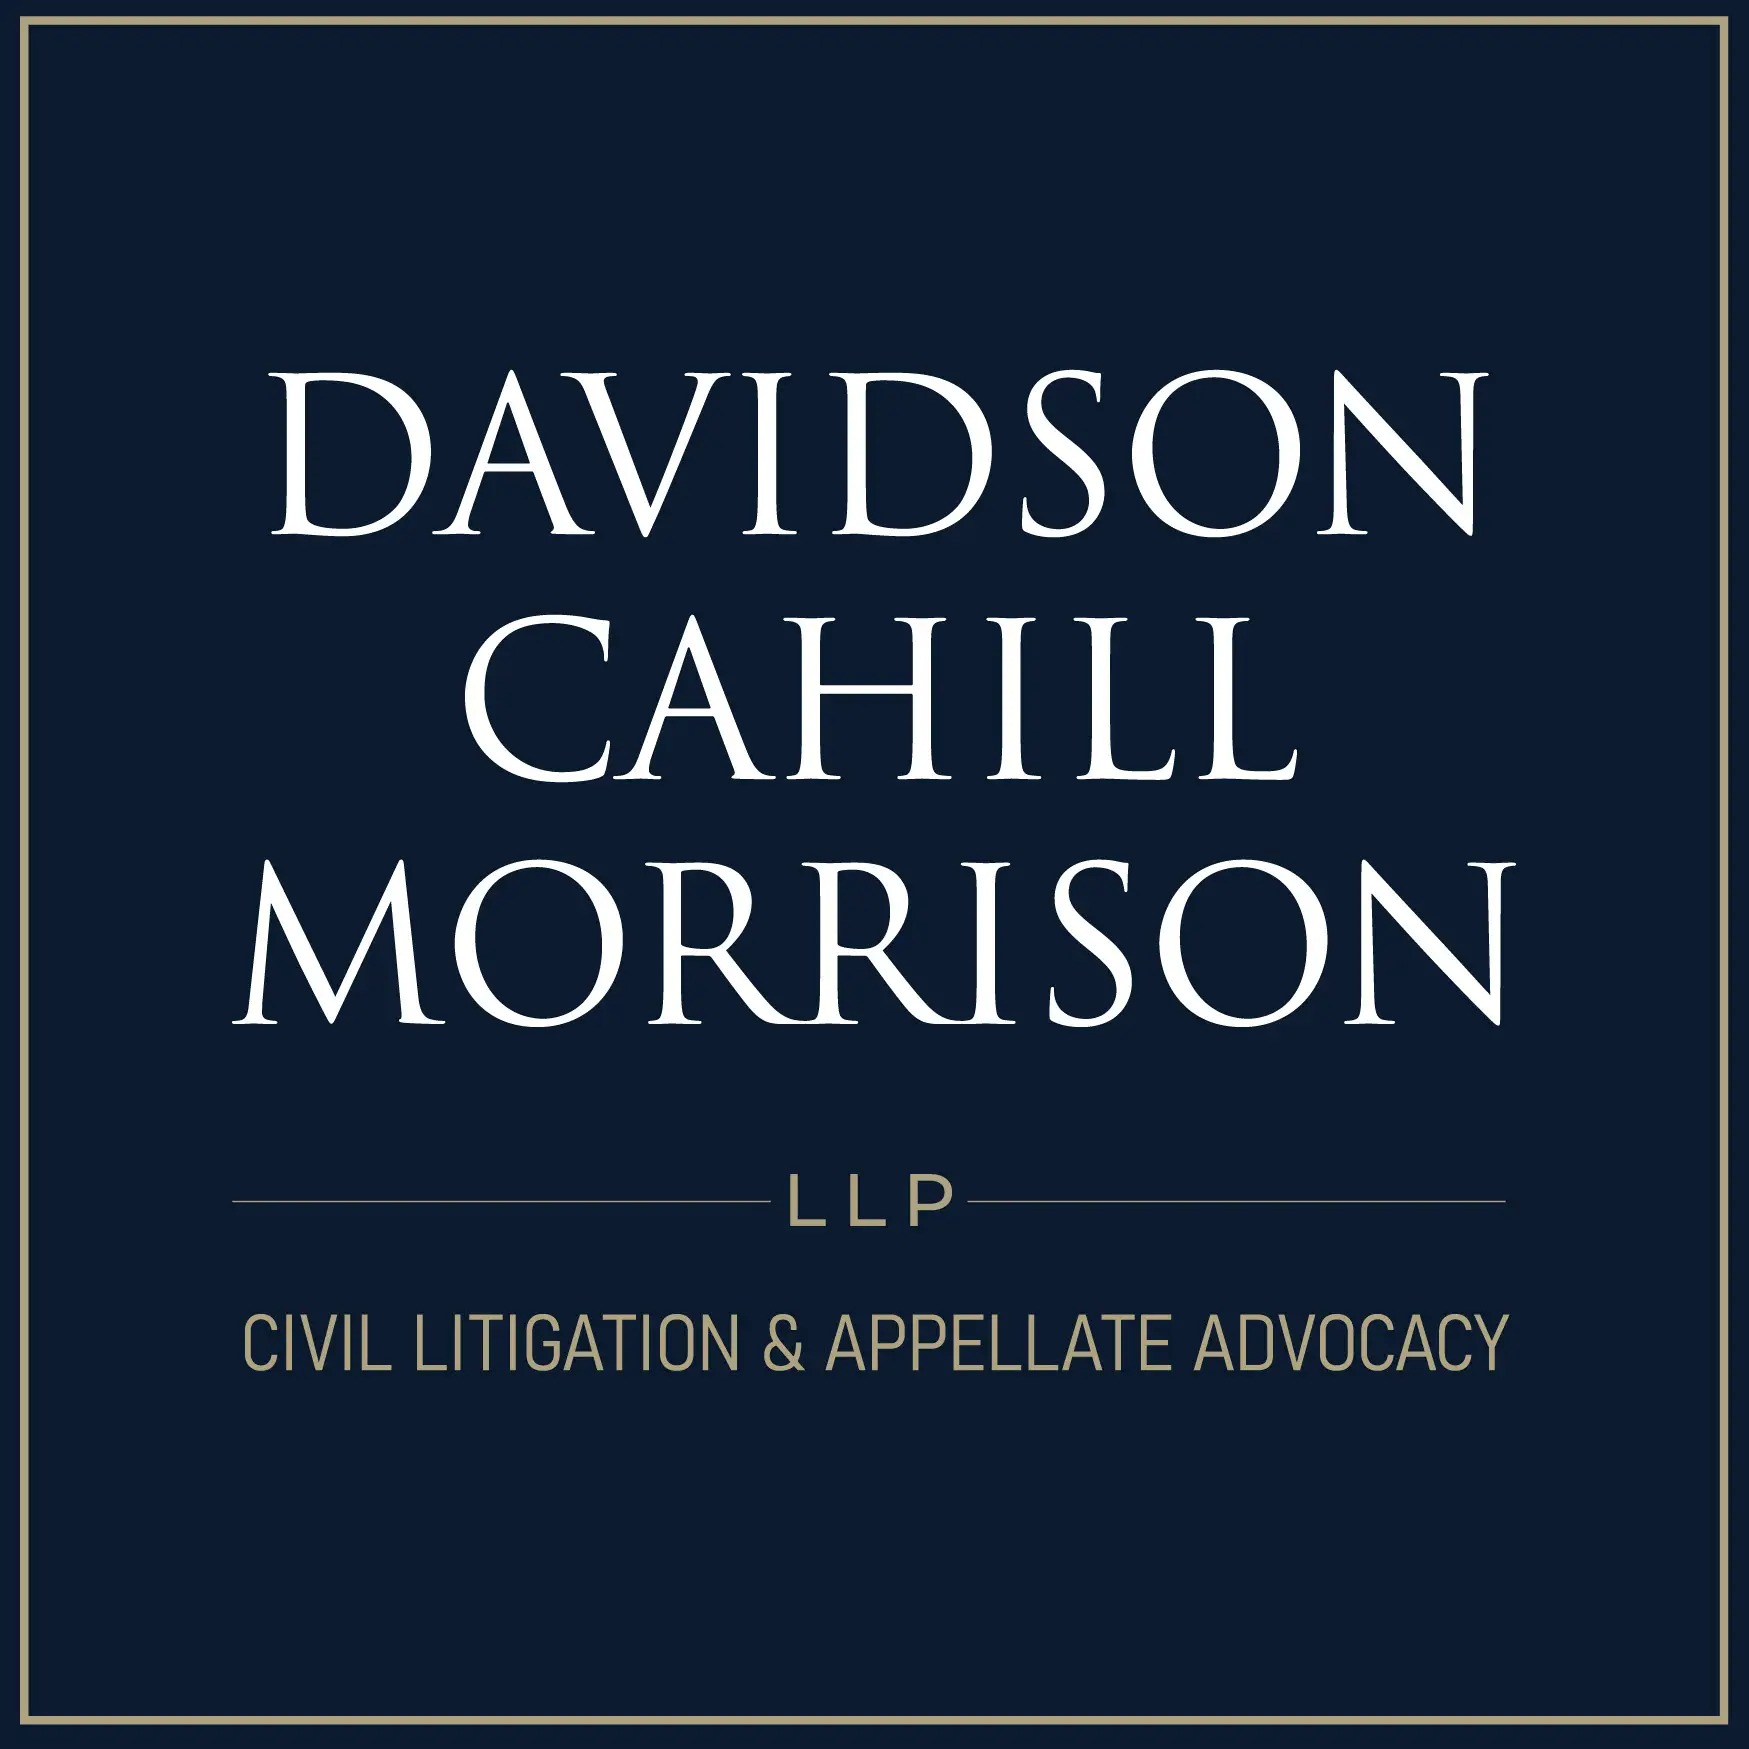 Davidson Cahill Morrison logo